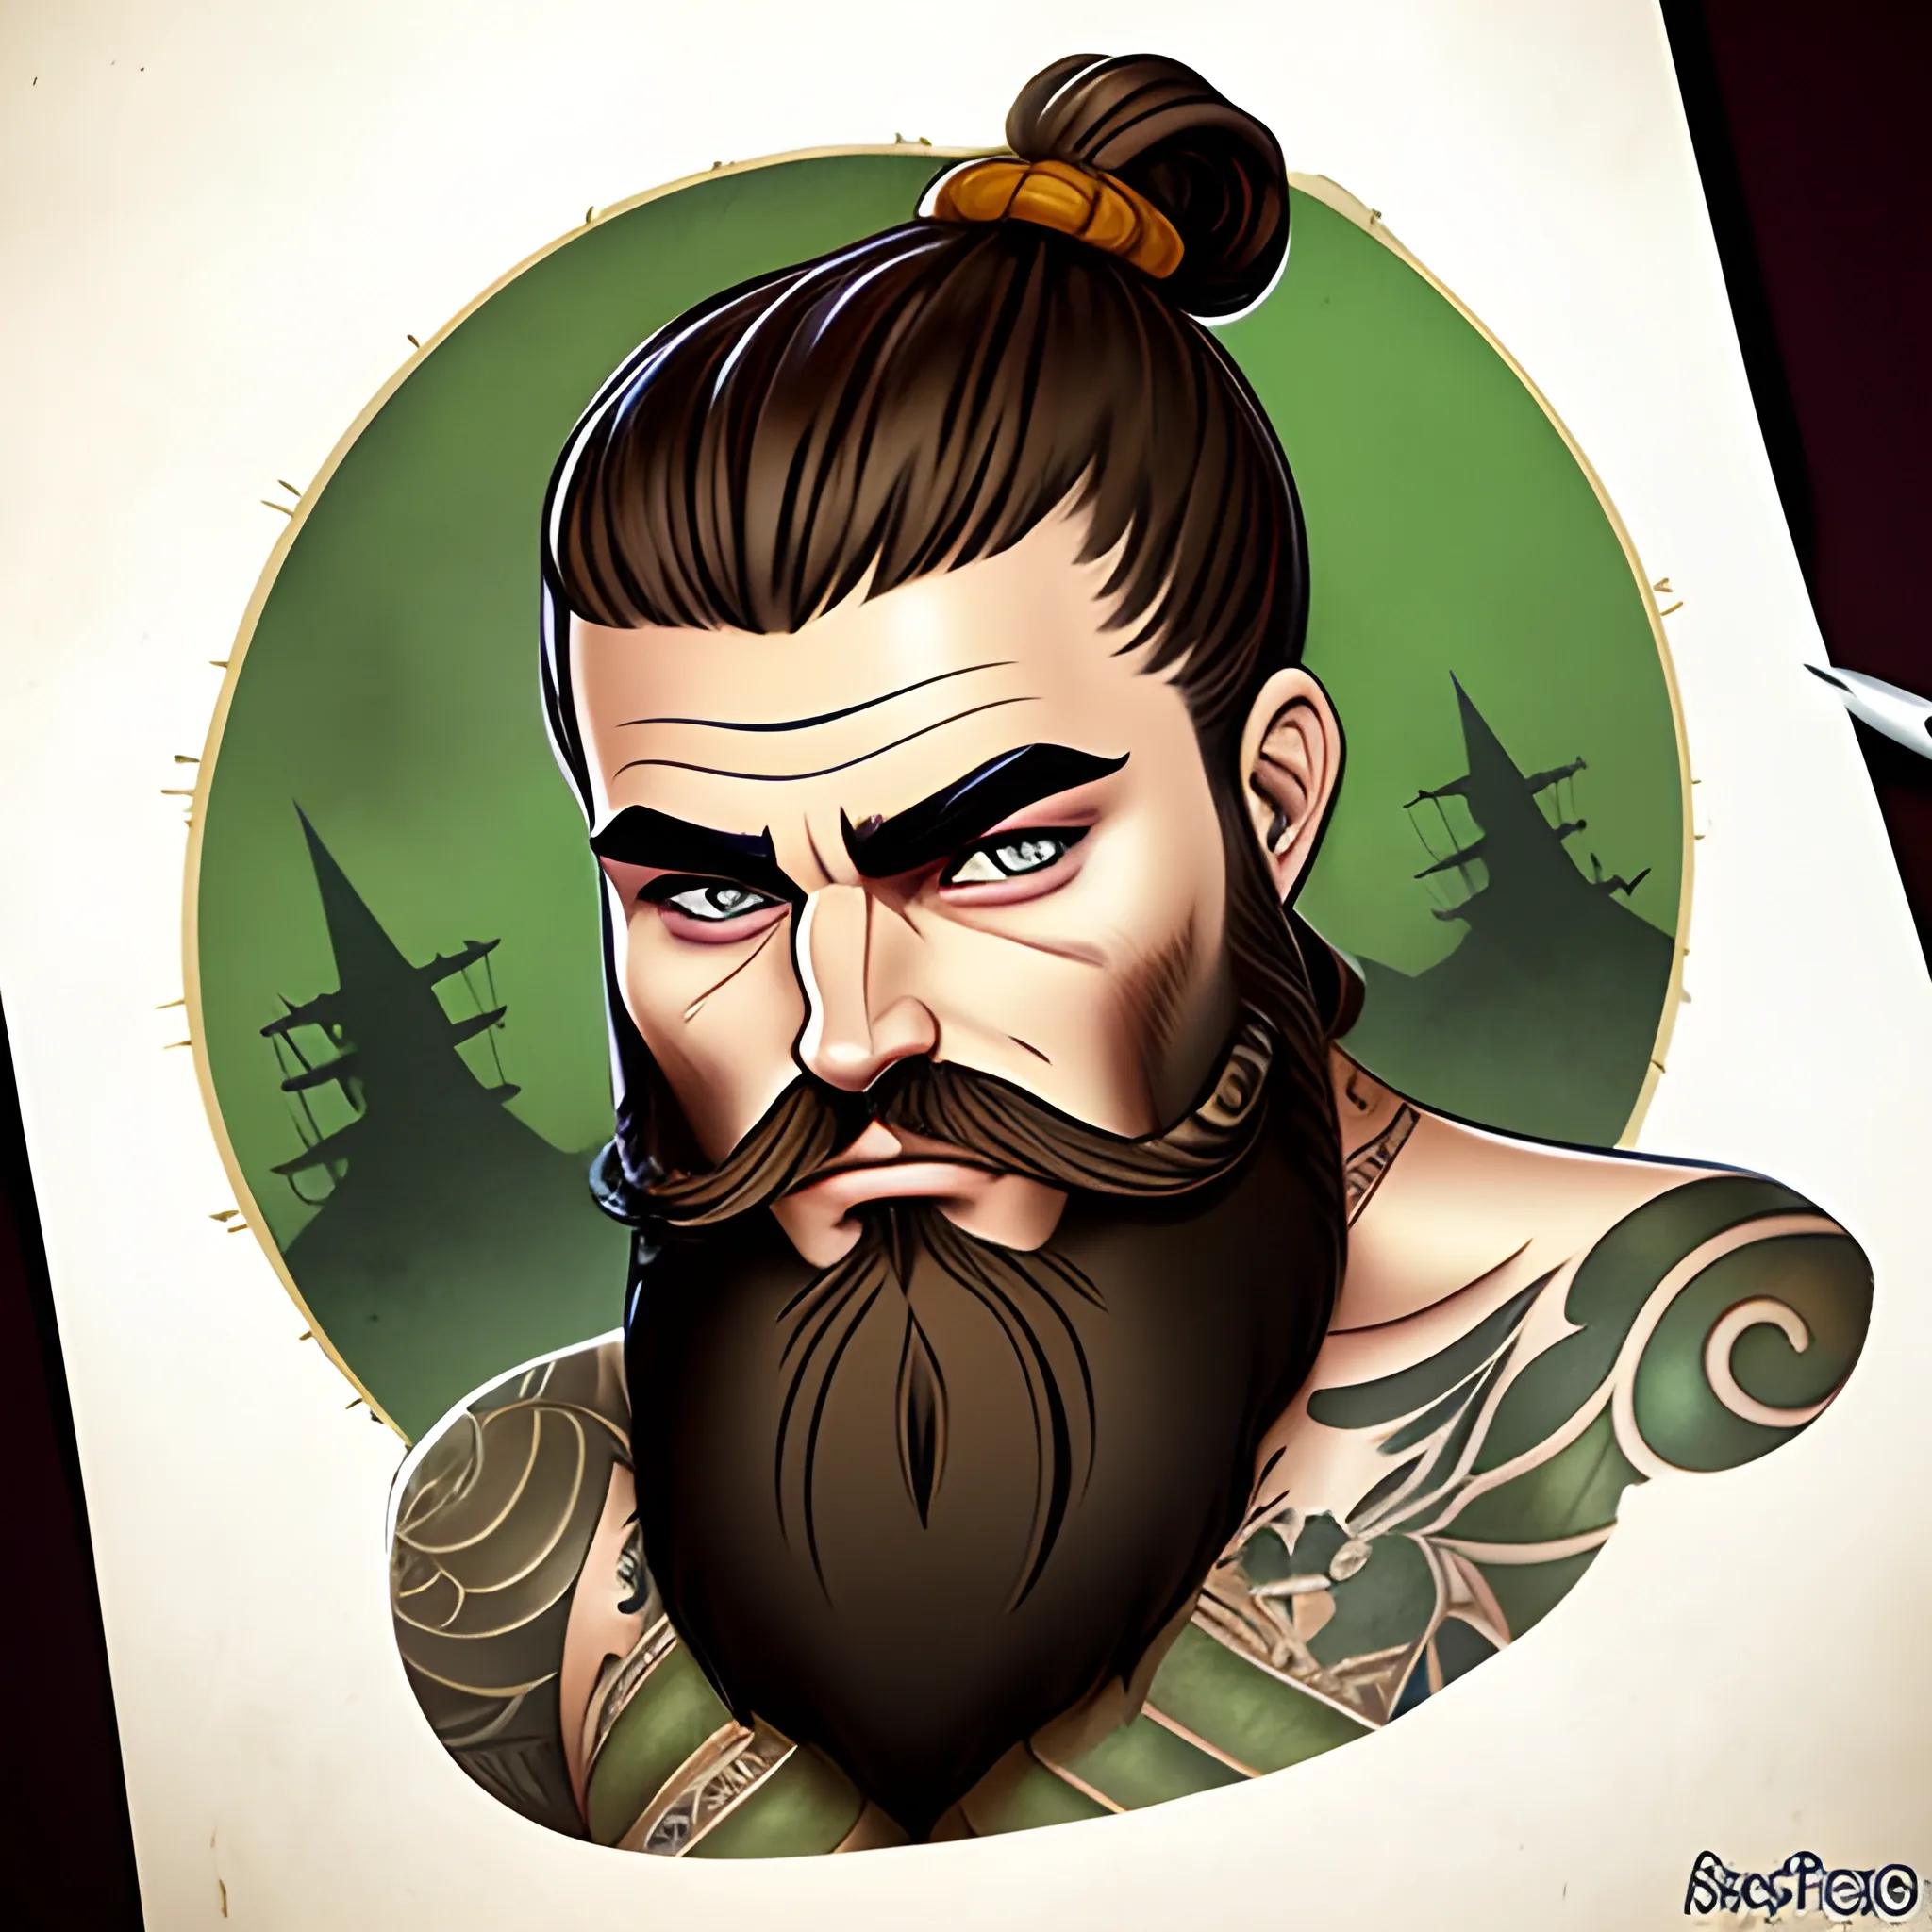 brown hair, man bun, beard, green eyes, dnd monk 
artstyle tattoos